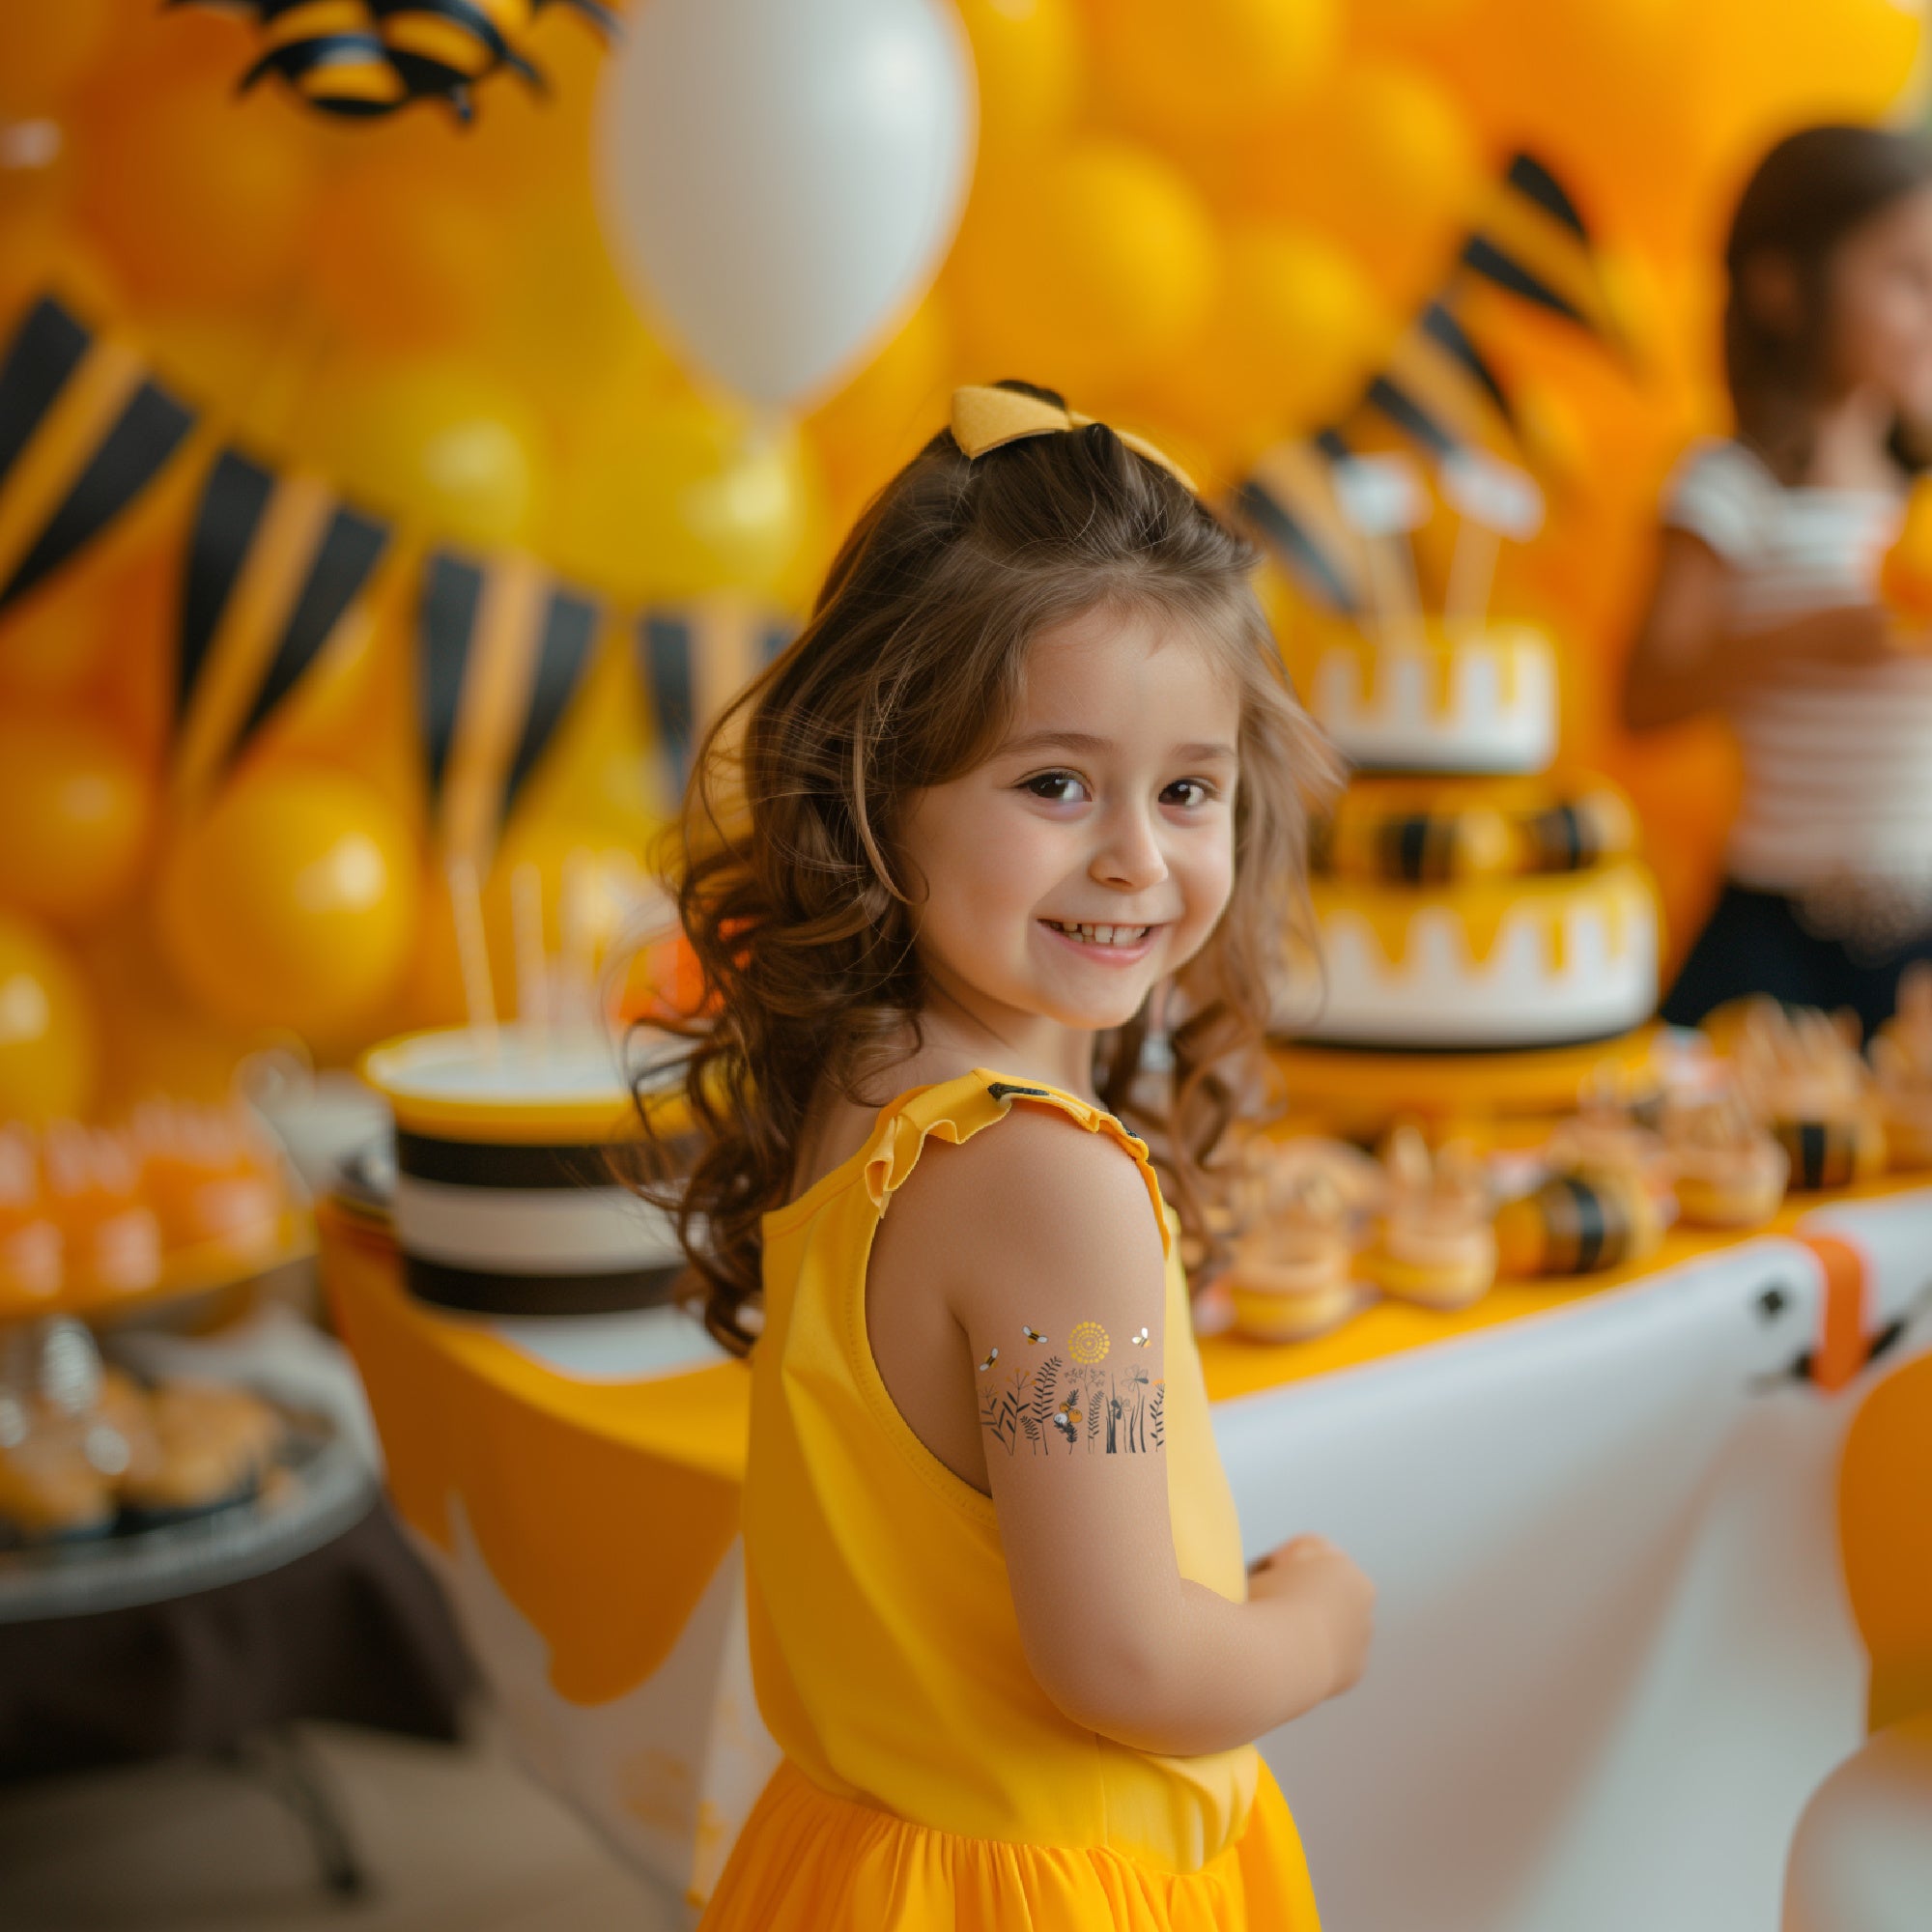 Honey Bees & Wild Flowers Temporary Tattoos - Kids Party Fun